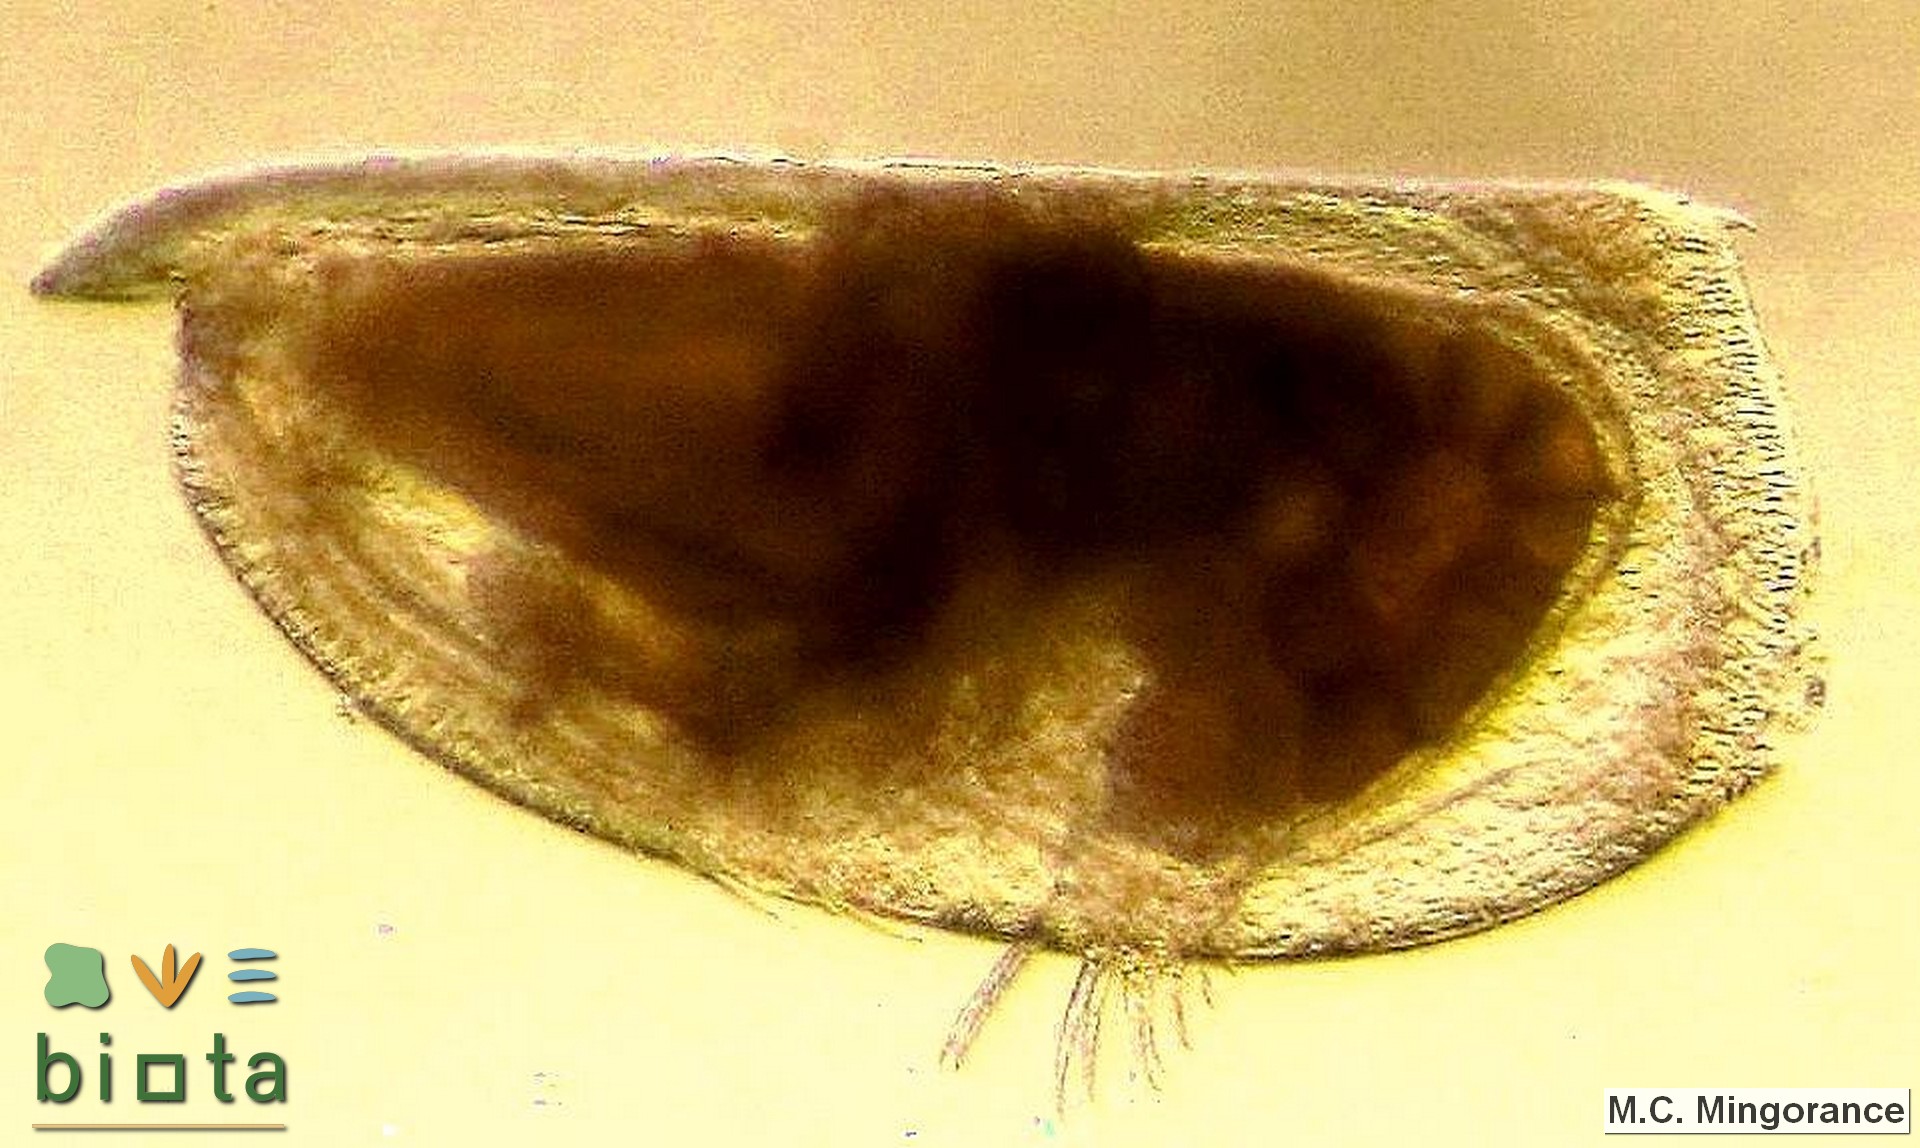 Disconchoecia elegans